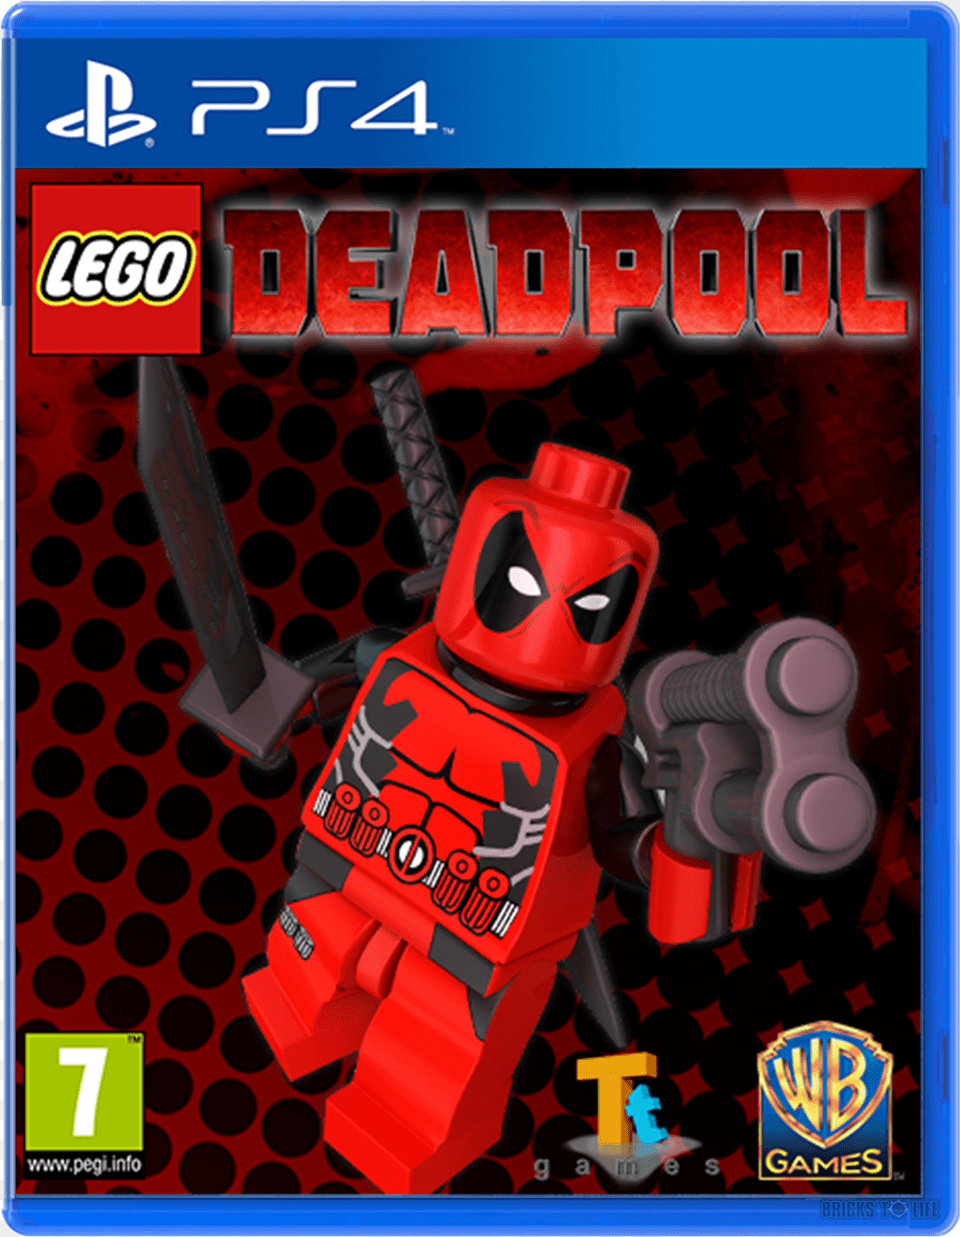 Deadpool Copy All Lego Deadpool Sets, Toy, Robot Png Image